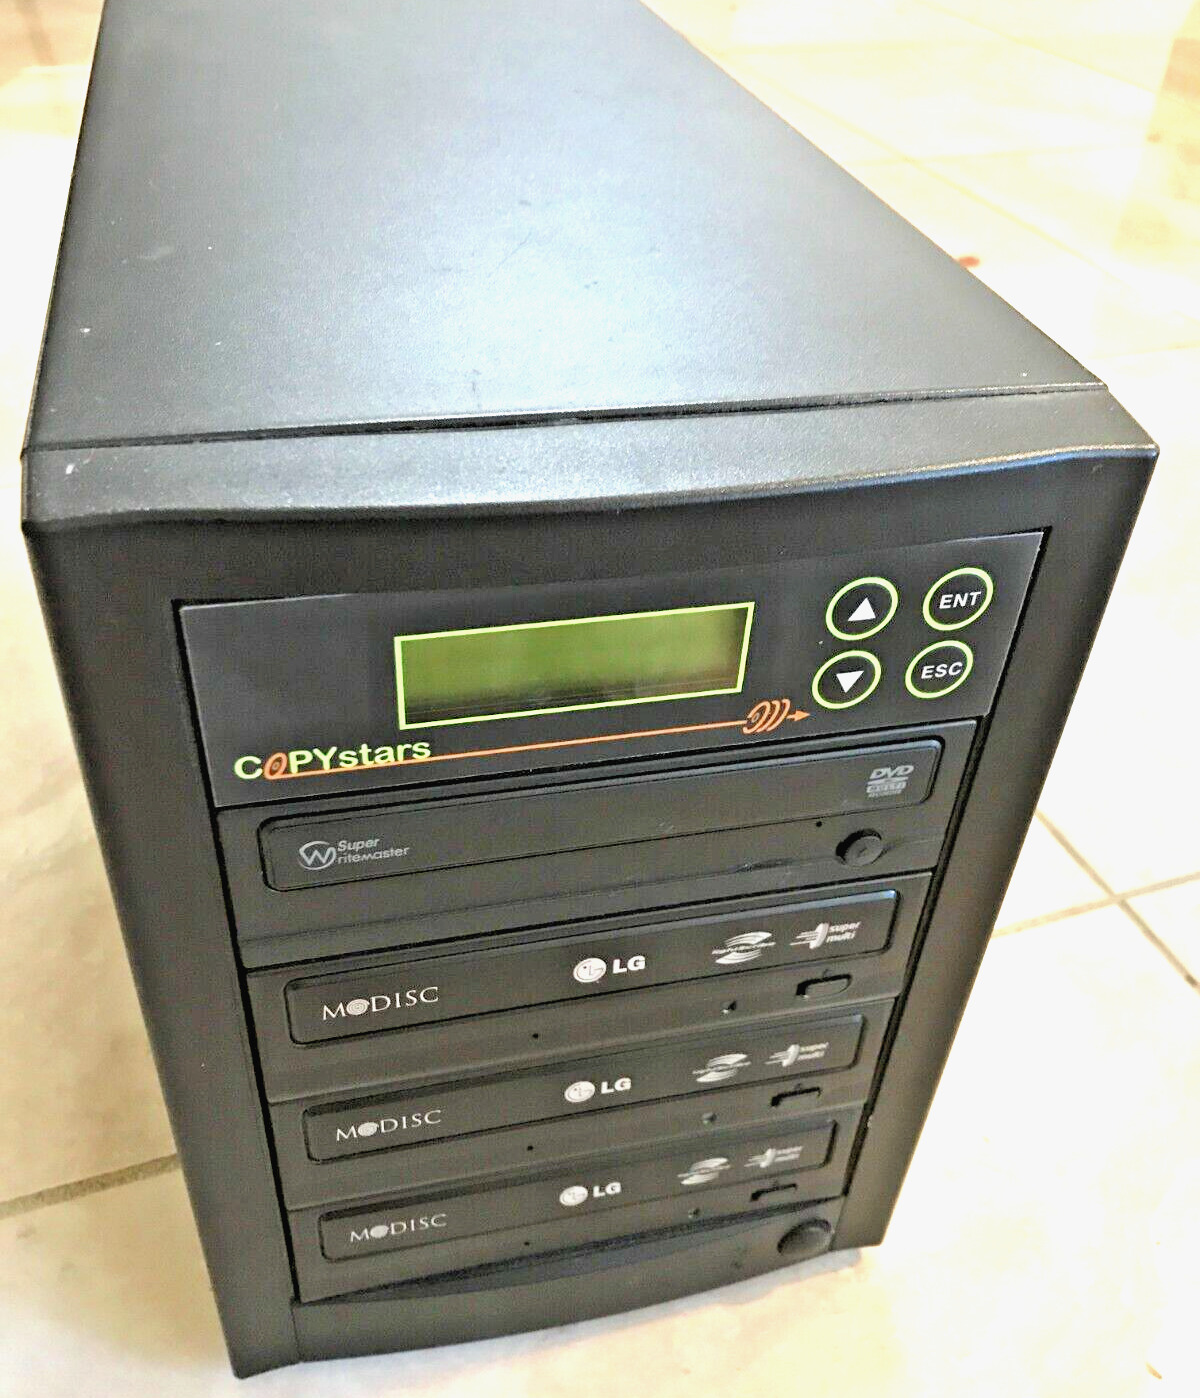 Copystars 1-3 DVD CD Duplicator Disc Burner Copier Writer Recorder Tower, Tested